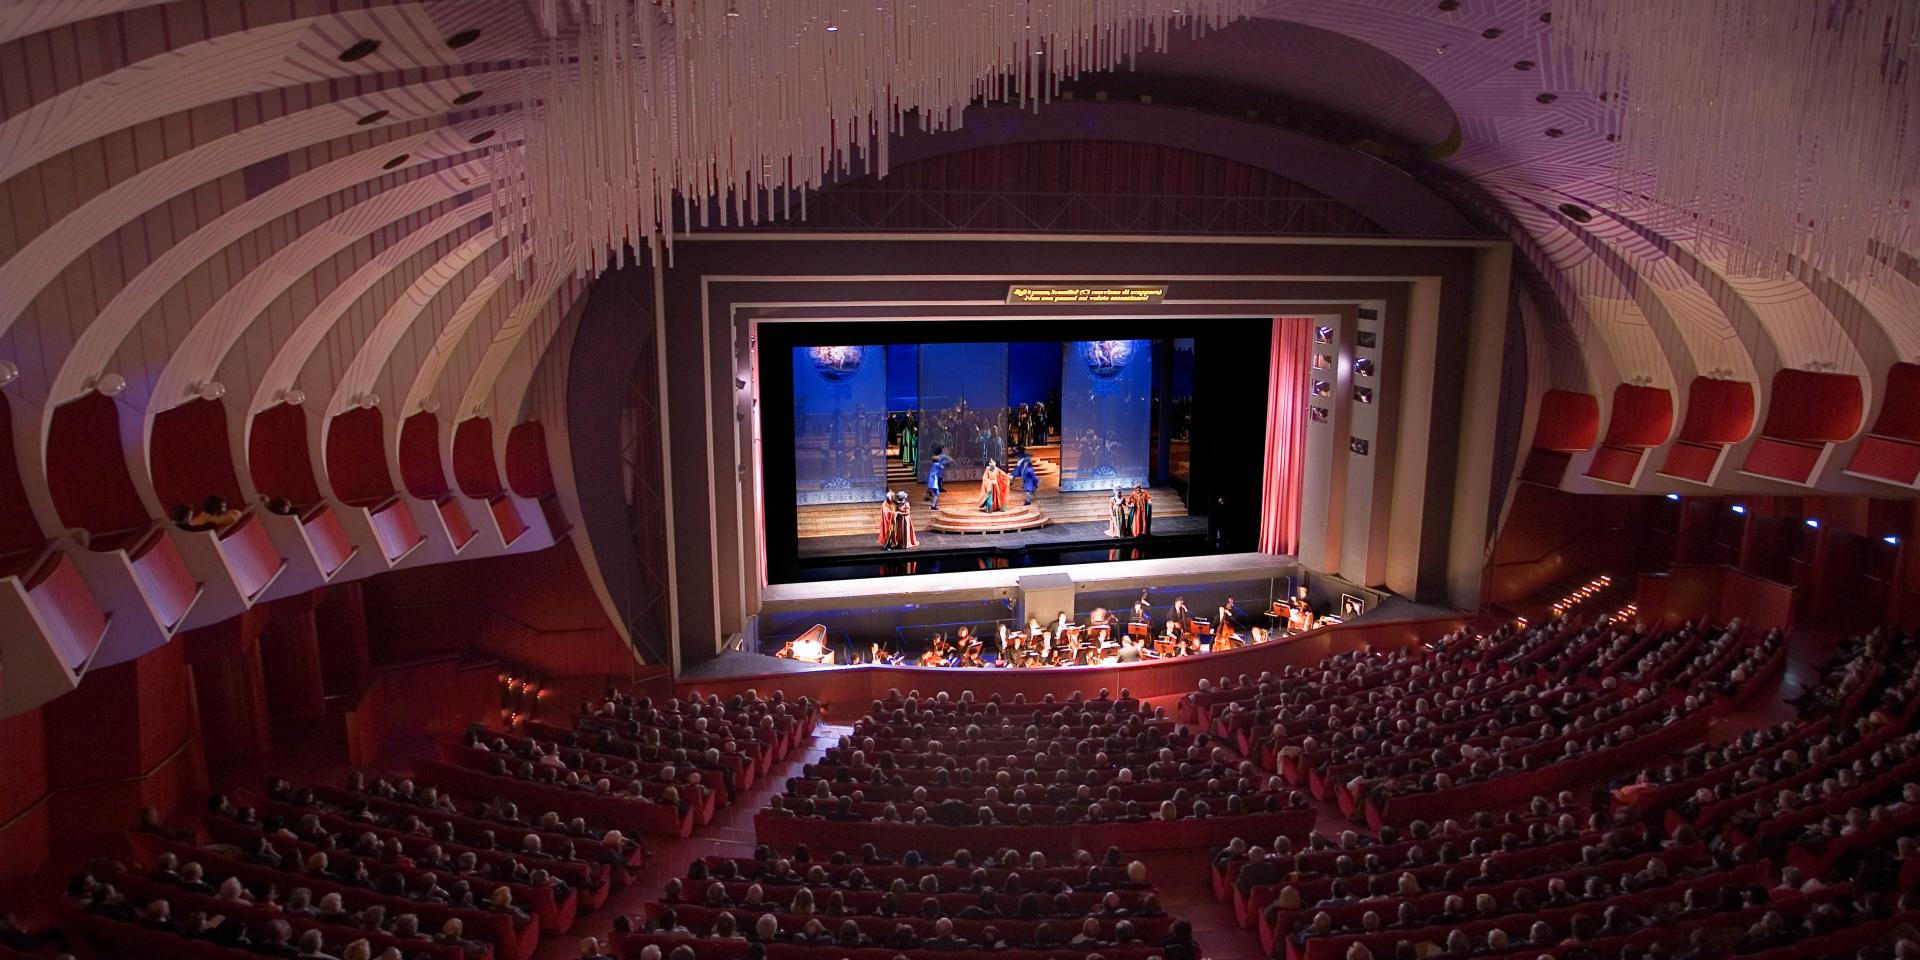 Teatro Regio's hall